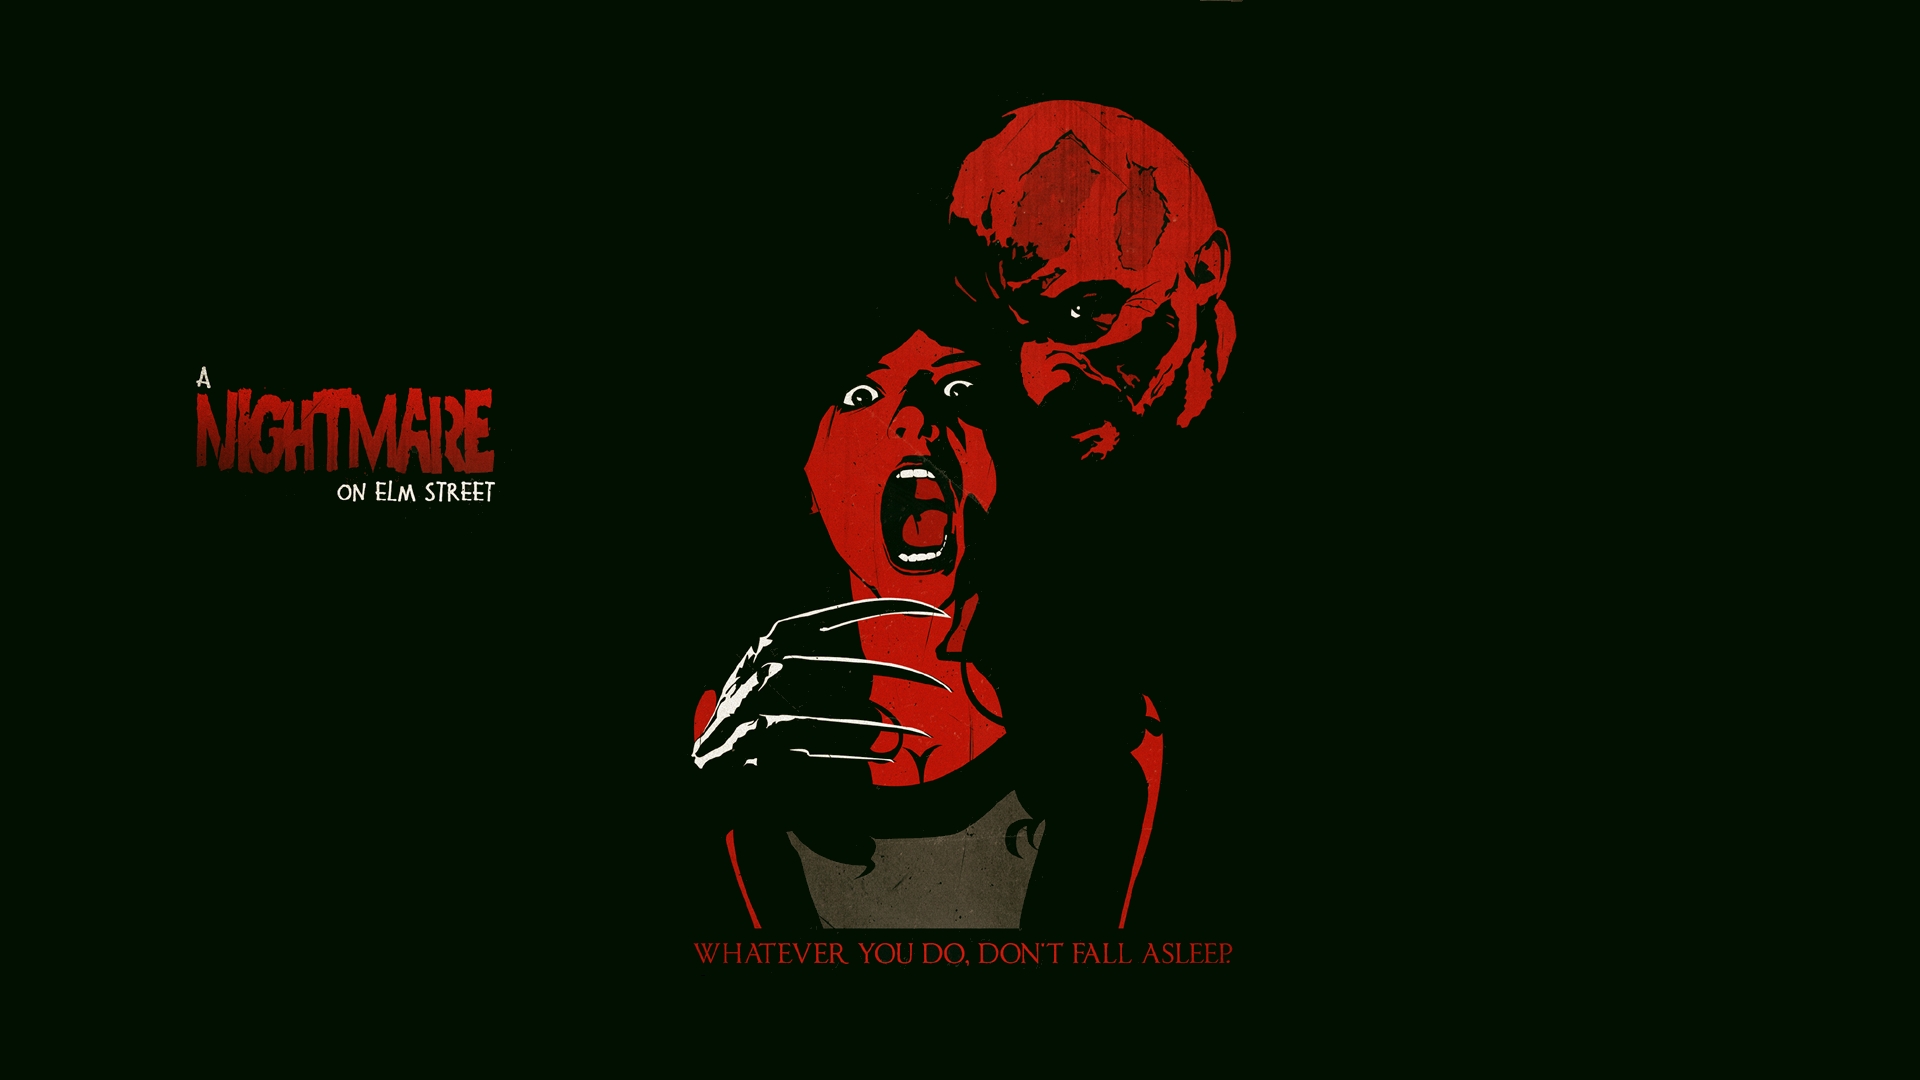 Movie A Nightmare on Elm Street (1984) HD Wallpaper Background Image. 